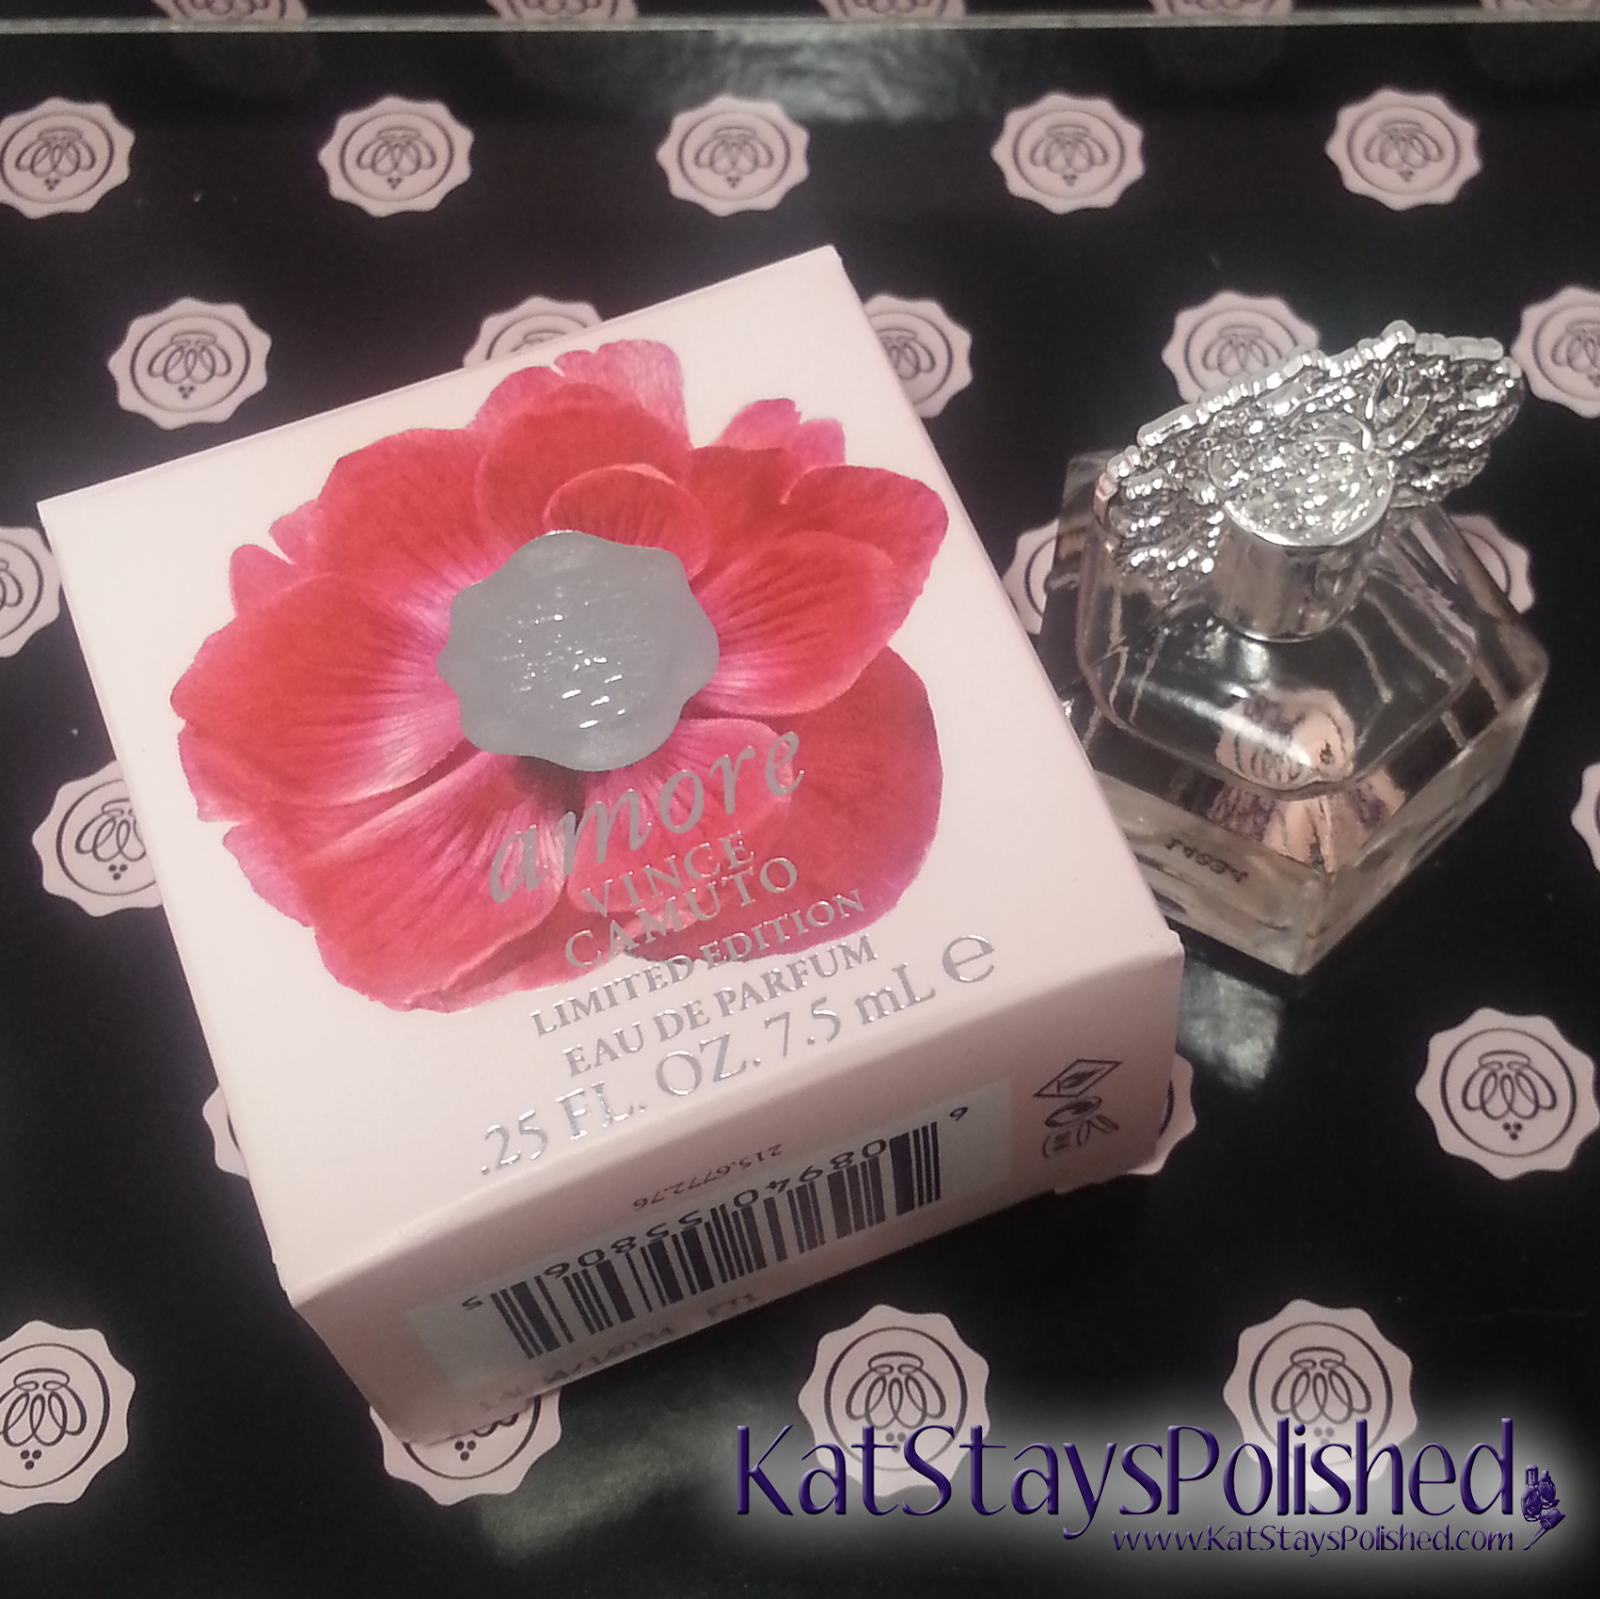 Glossybox October 2014 - Vince Camuto Amore eau de parfum | Kat Stays Polished